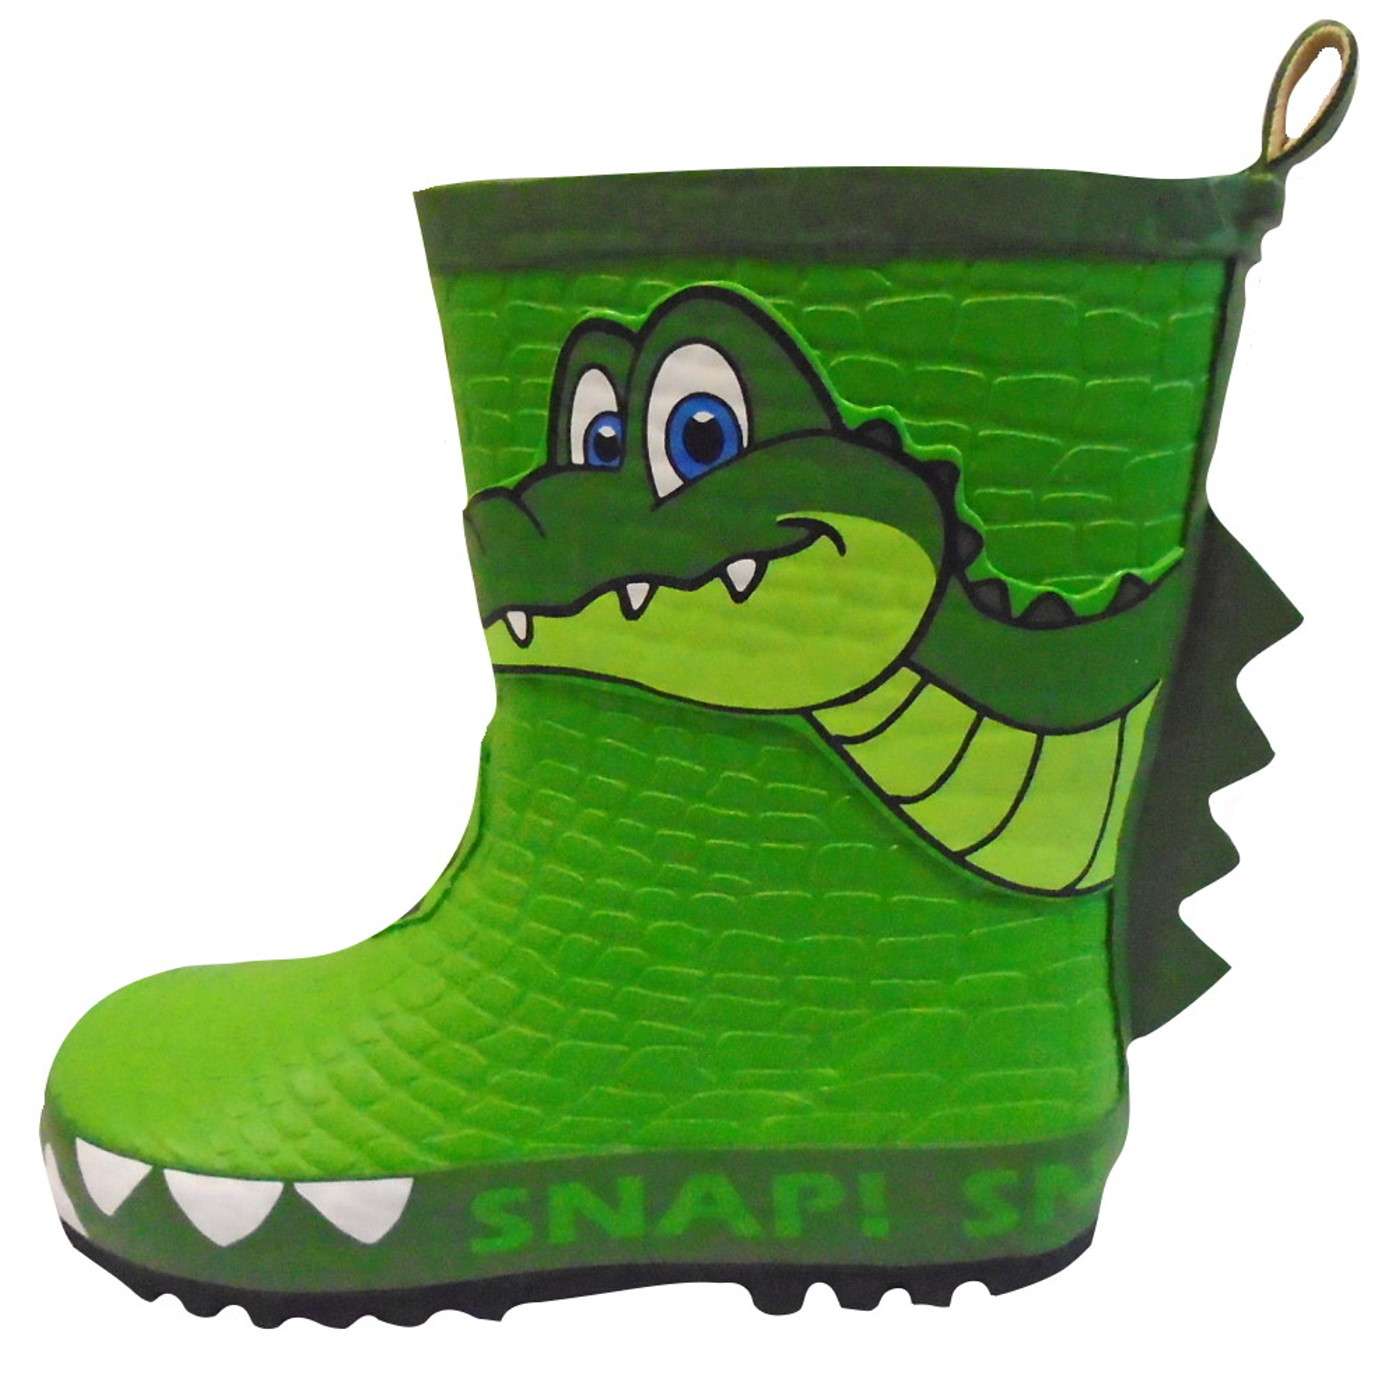 Boys “Snappy Croc” Wellingtons Rain Boots